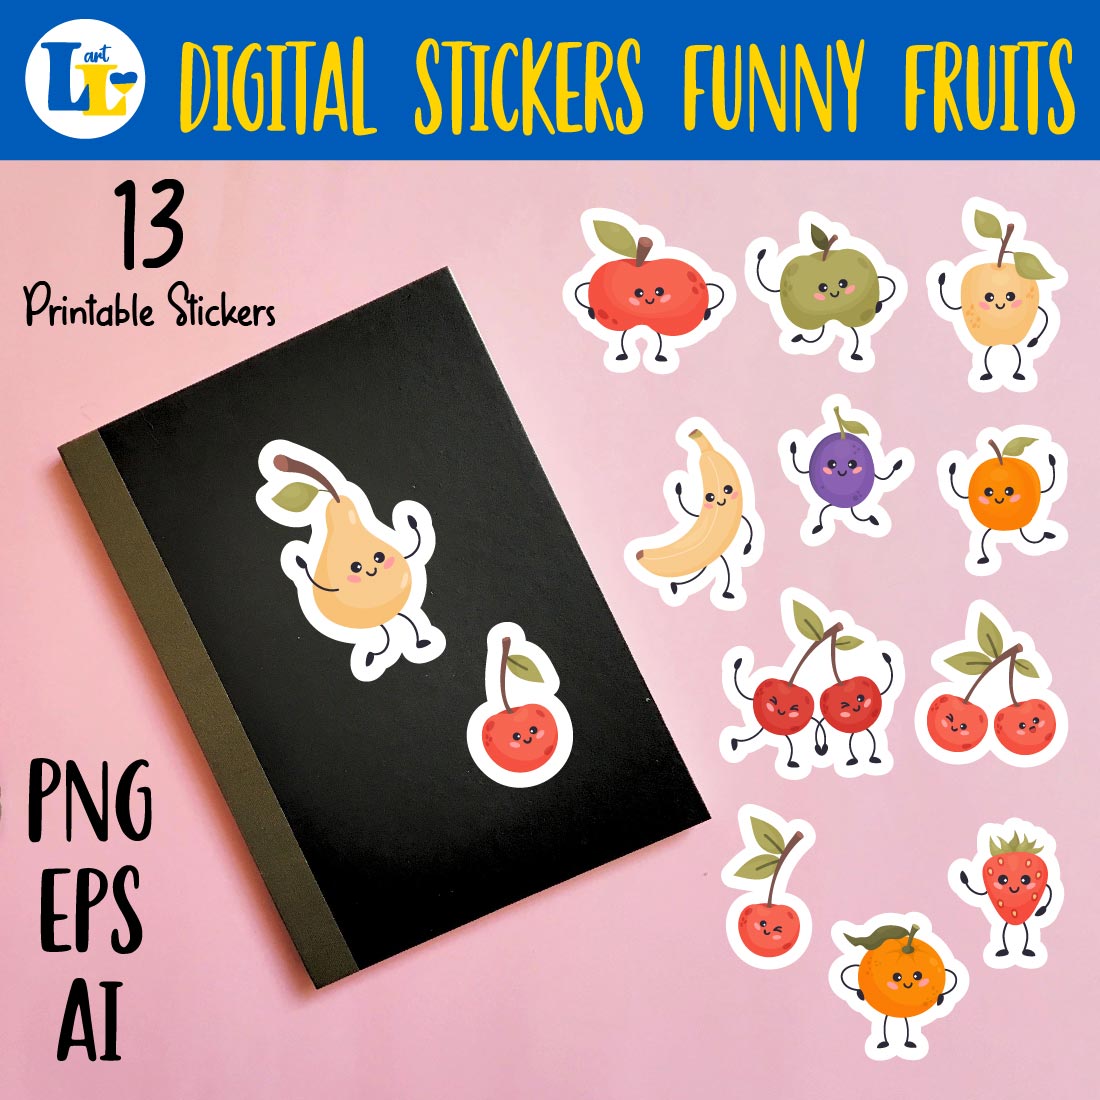 Cute fruit kawaii characters stickers bundle | 13 Printable digital sticker cover image.